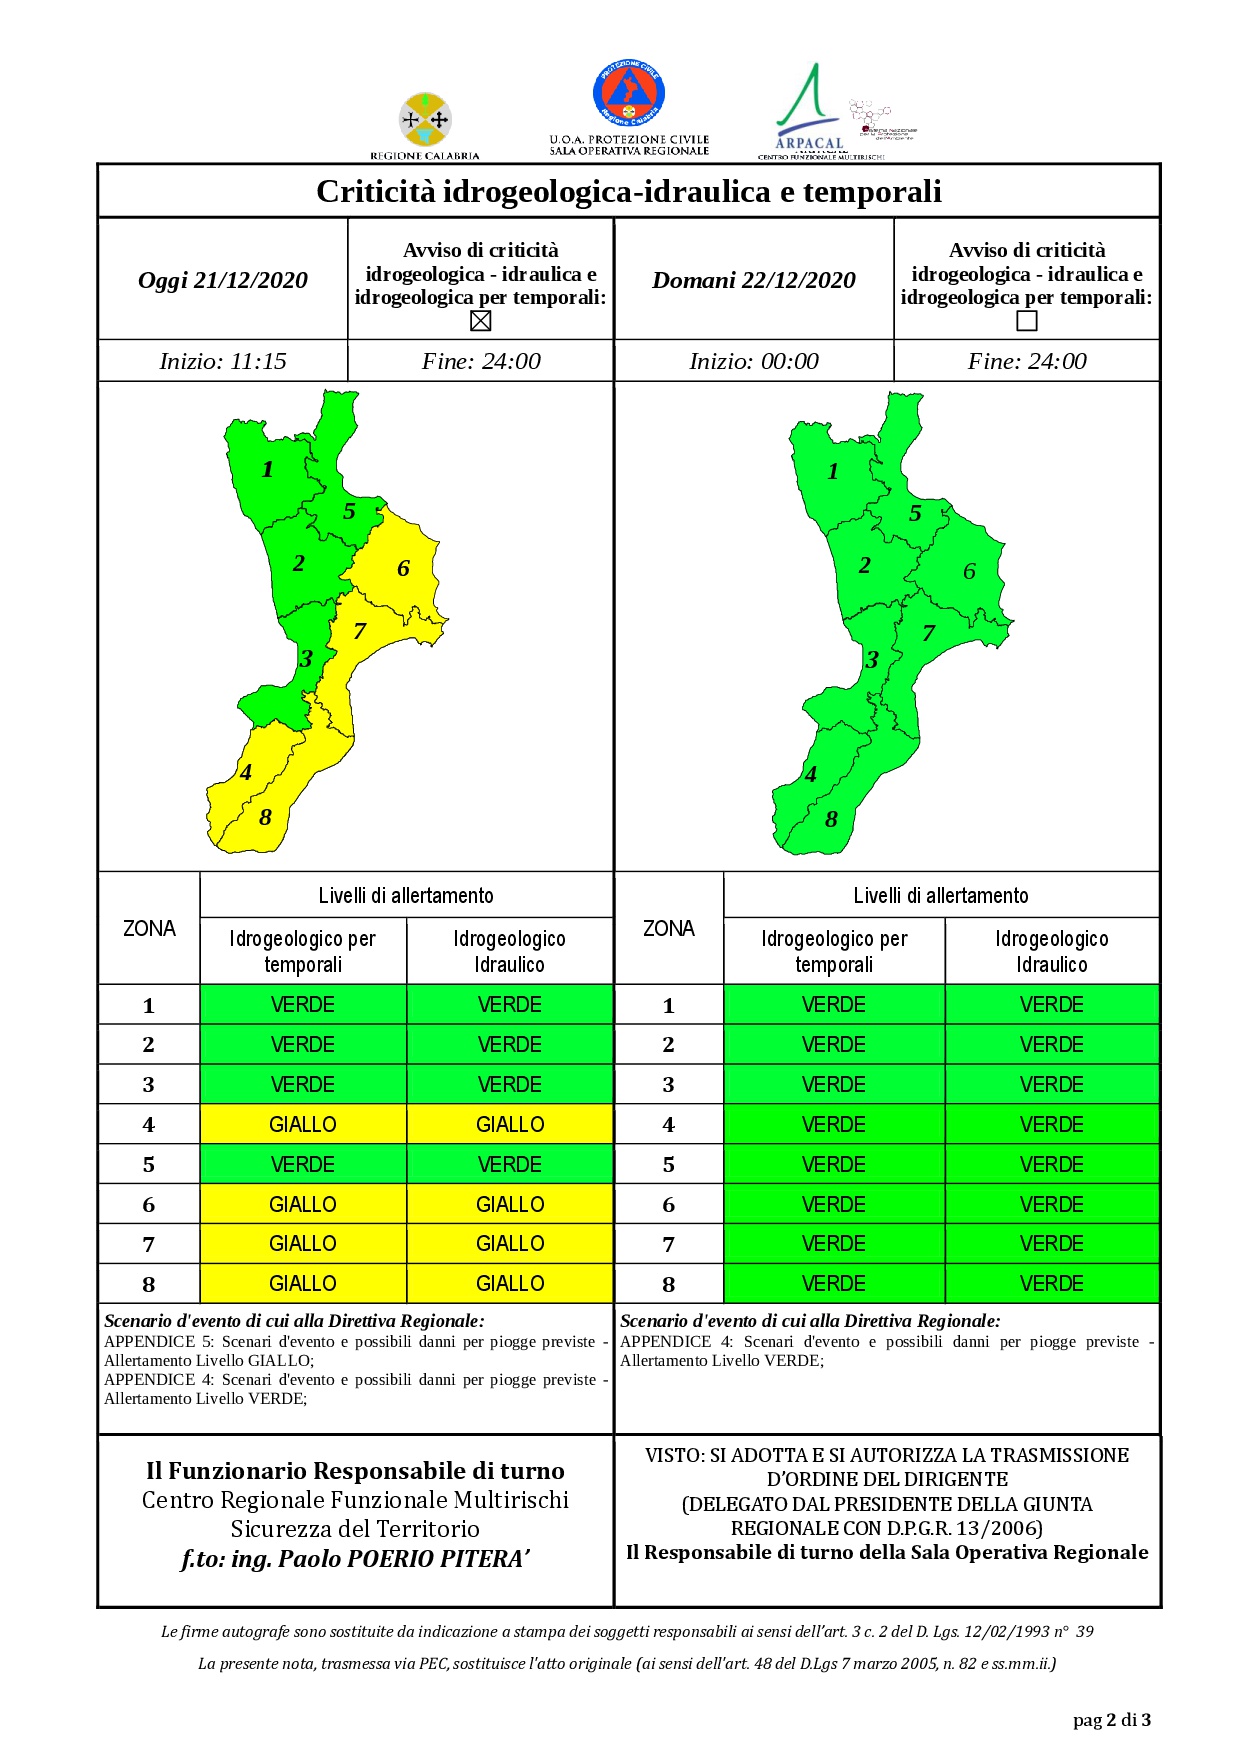 Criticità idrogeologica-idraulica e temporali in Calabria 21-12-2020